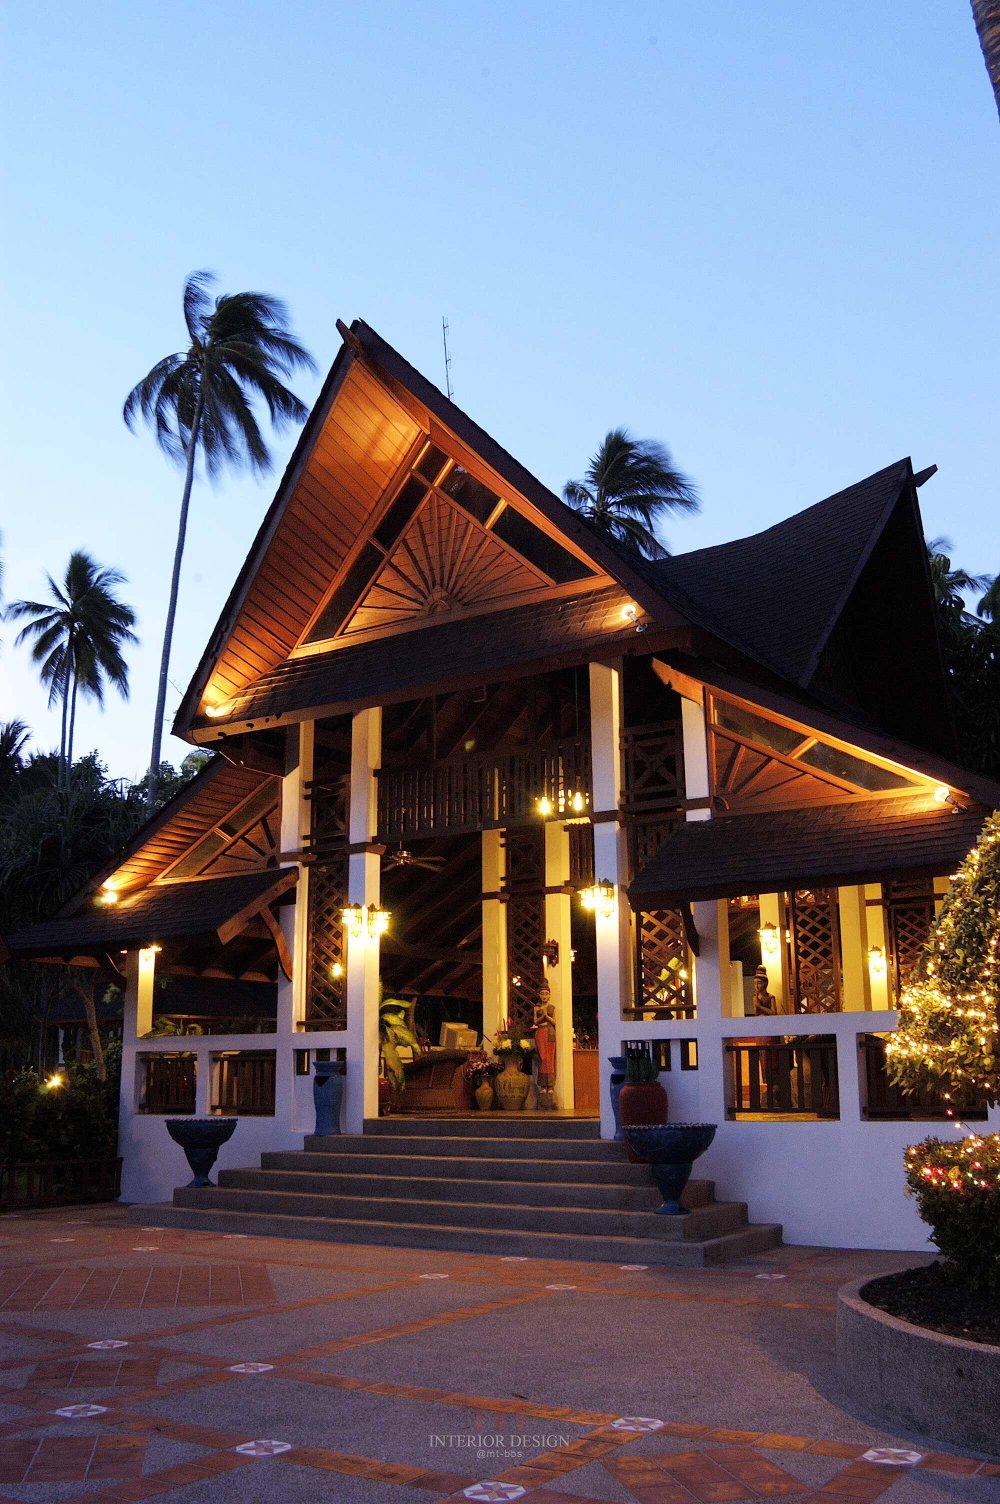 泰国皮皮岛假日酒店 Holiday Inn Resort Phi Phi Island_33085533-H1-WELCM_EXTR_01.JPG